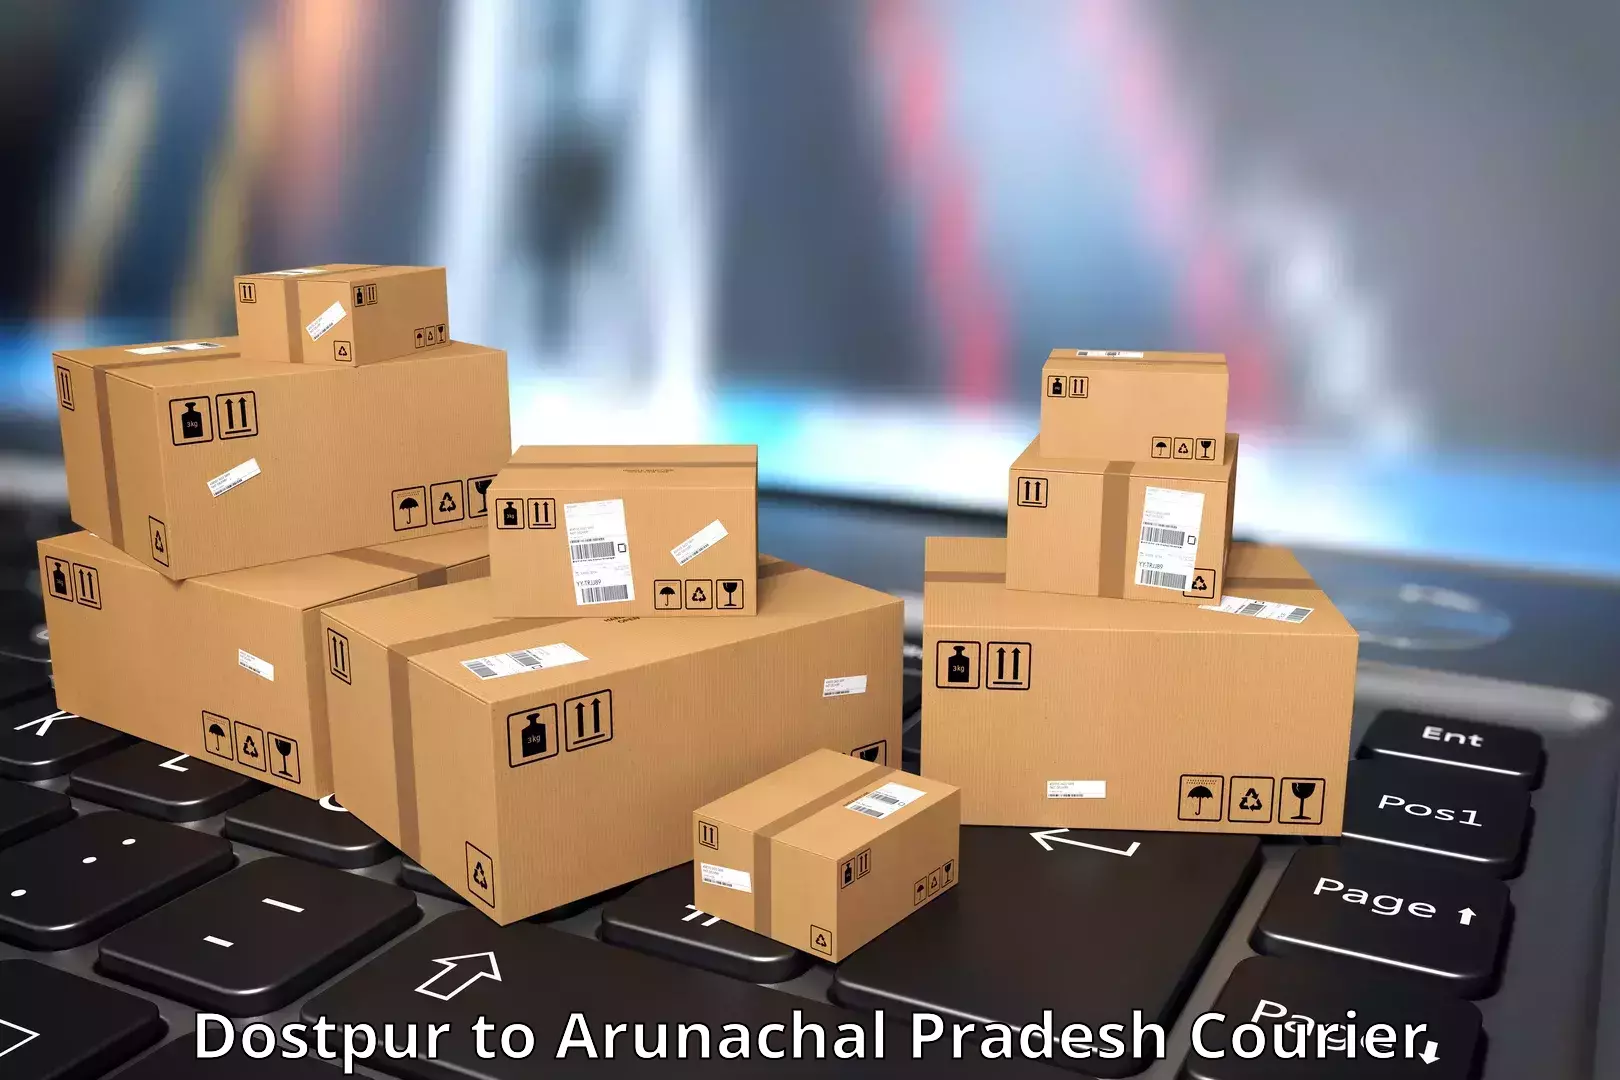 Same-day delivery solutions Dostpur to Arunachal Pradesh